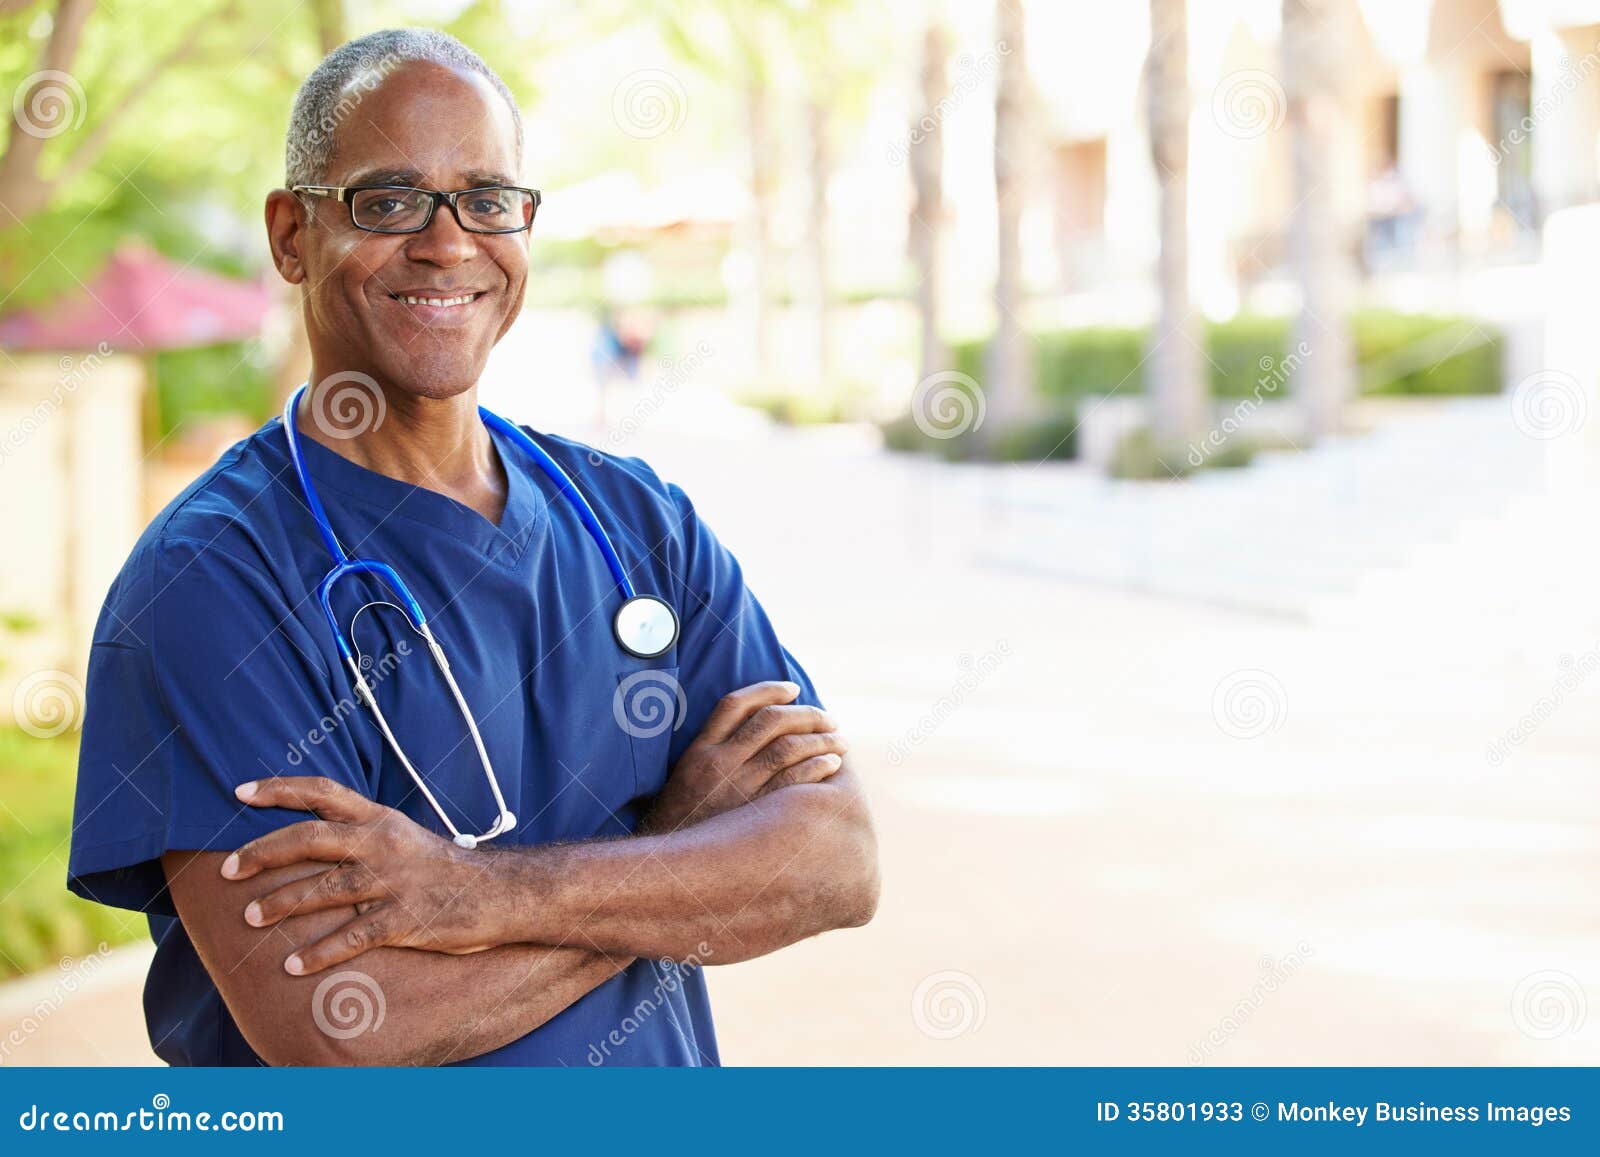 outdoor portrait of male nurse